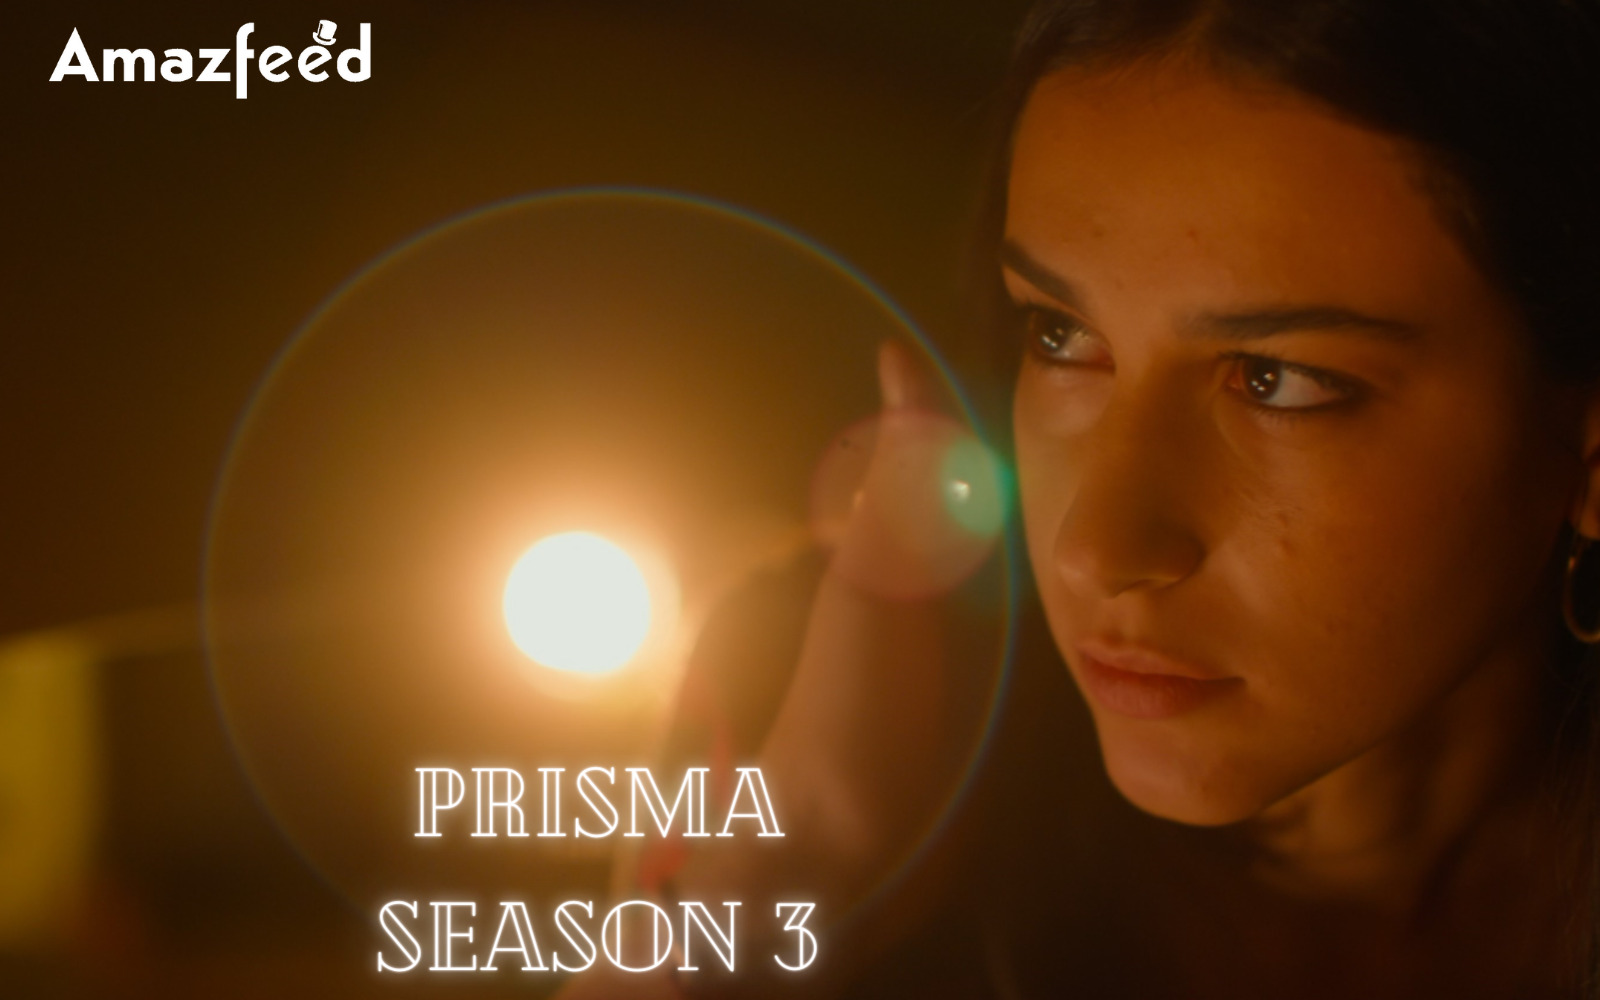 Prisma Season 3 Release Date